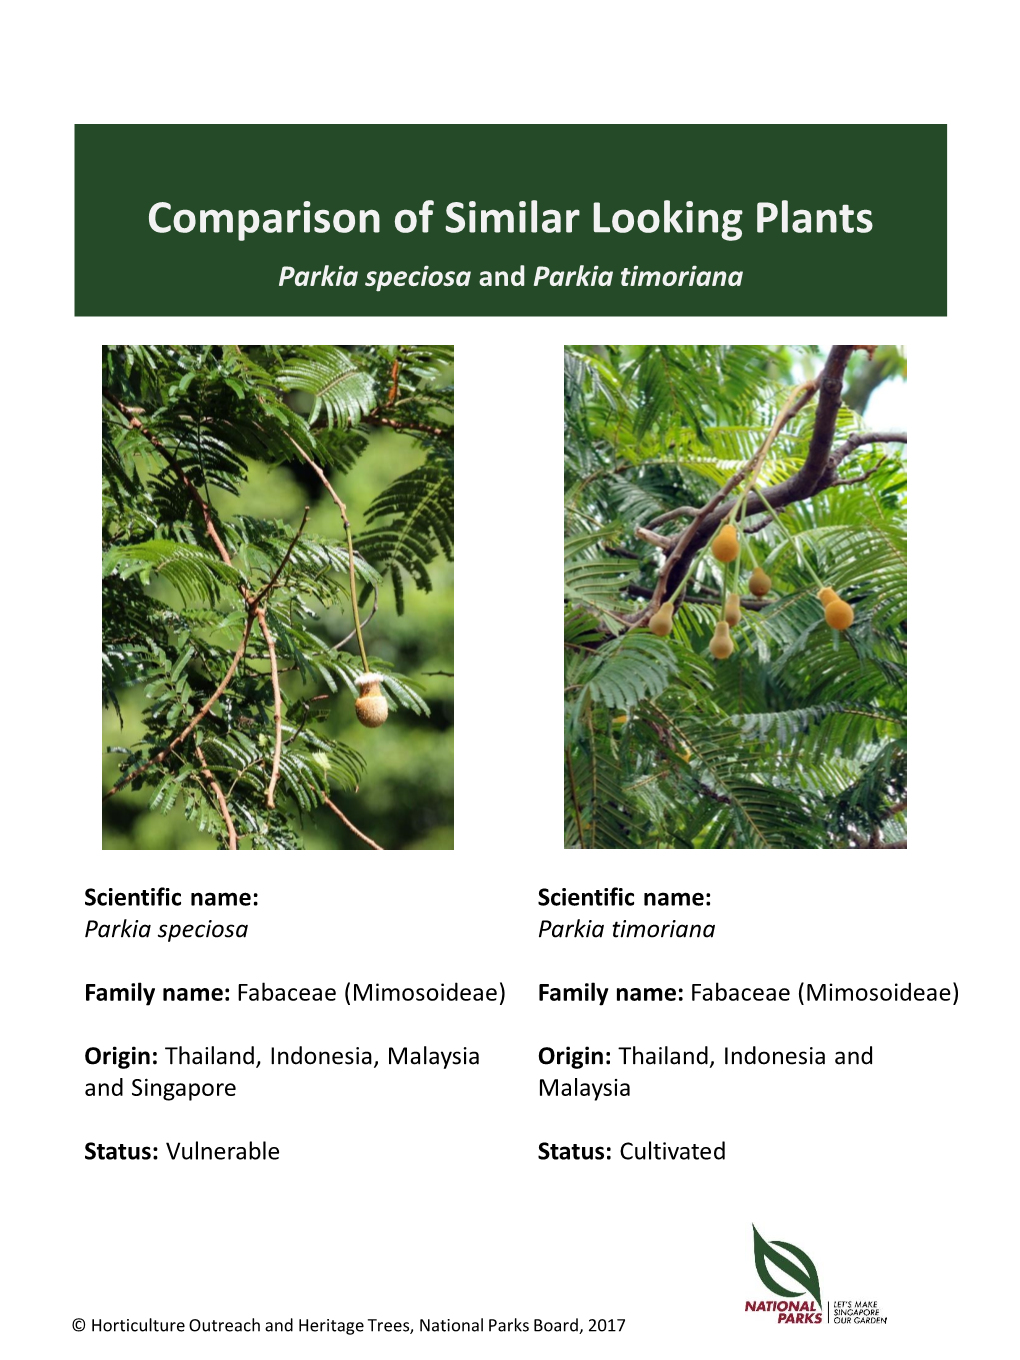 Comparison of Similar Looking Plants Parkia Speciosa and Parkia Timoriana